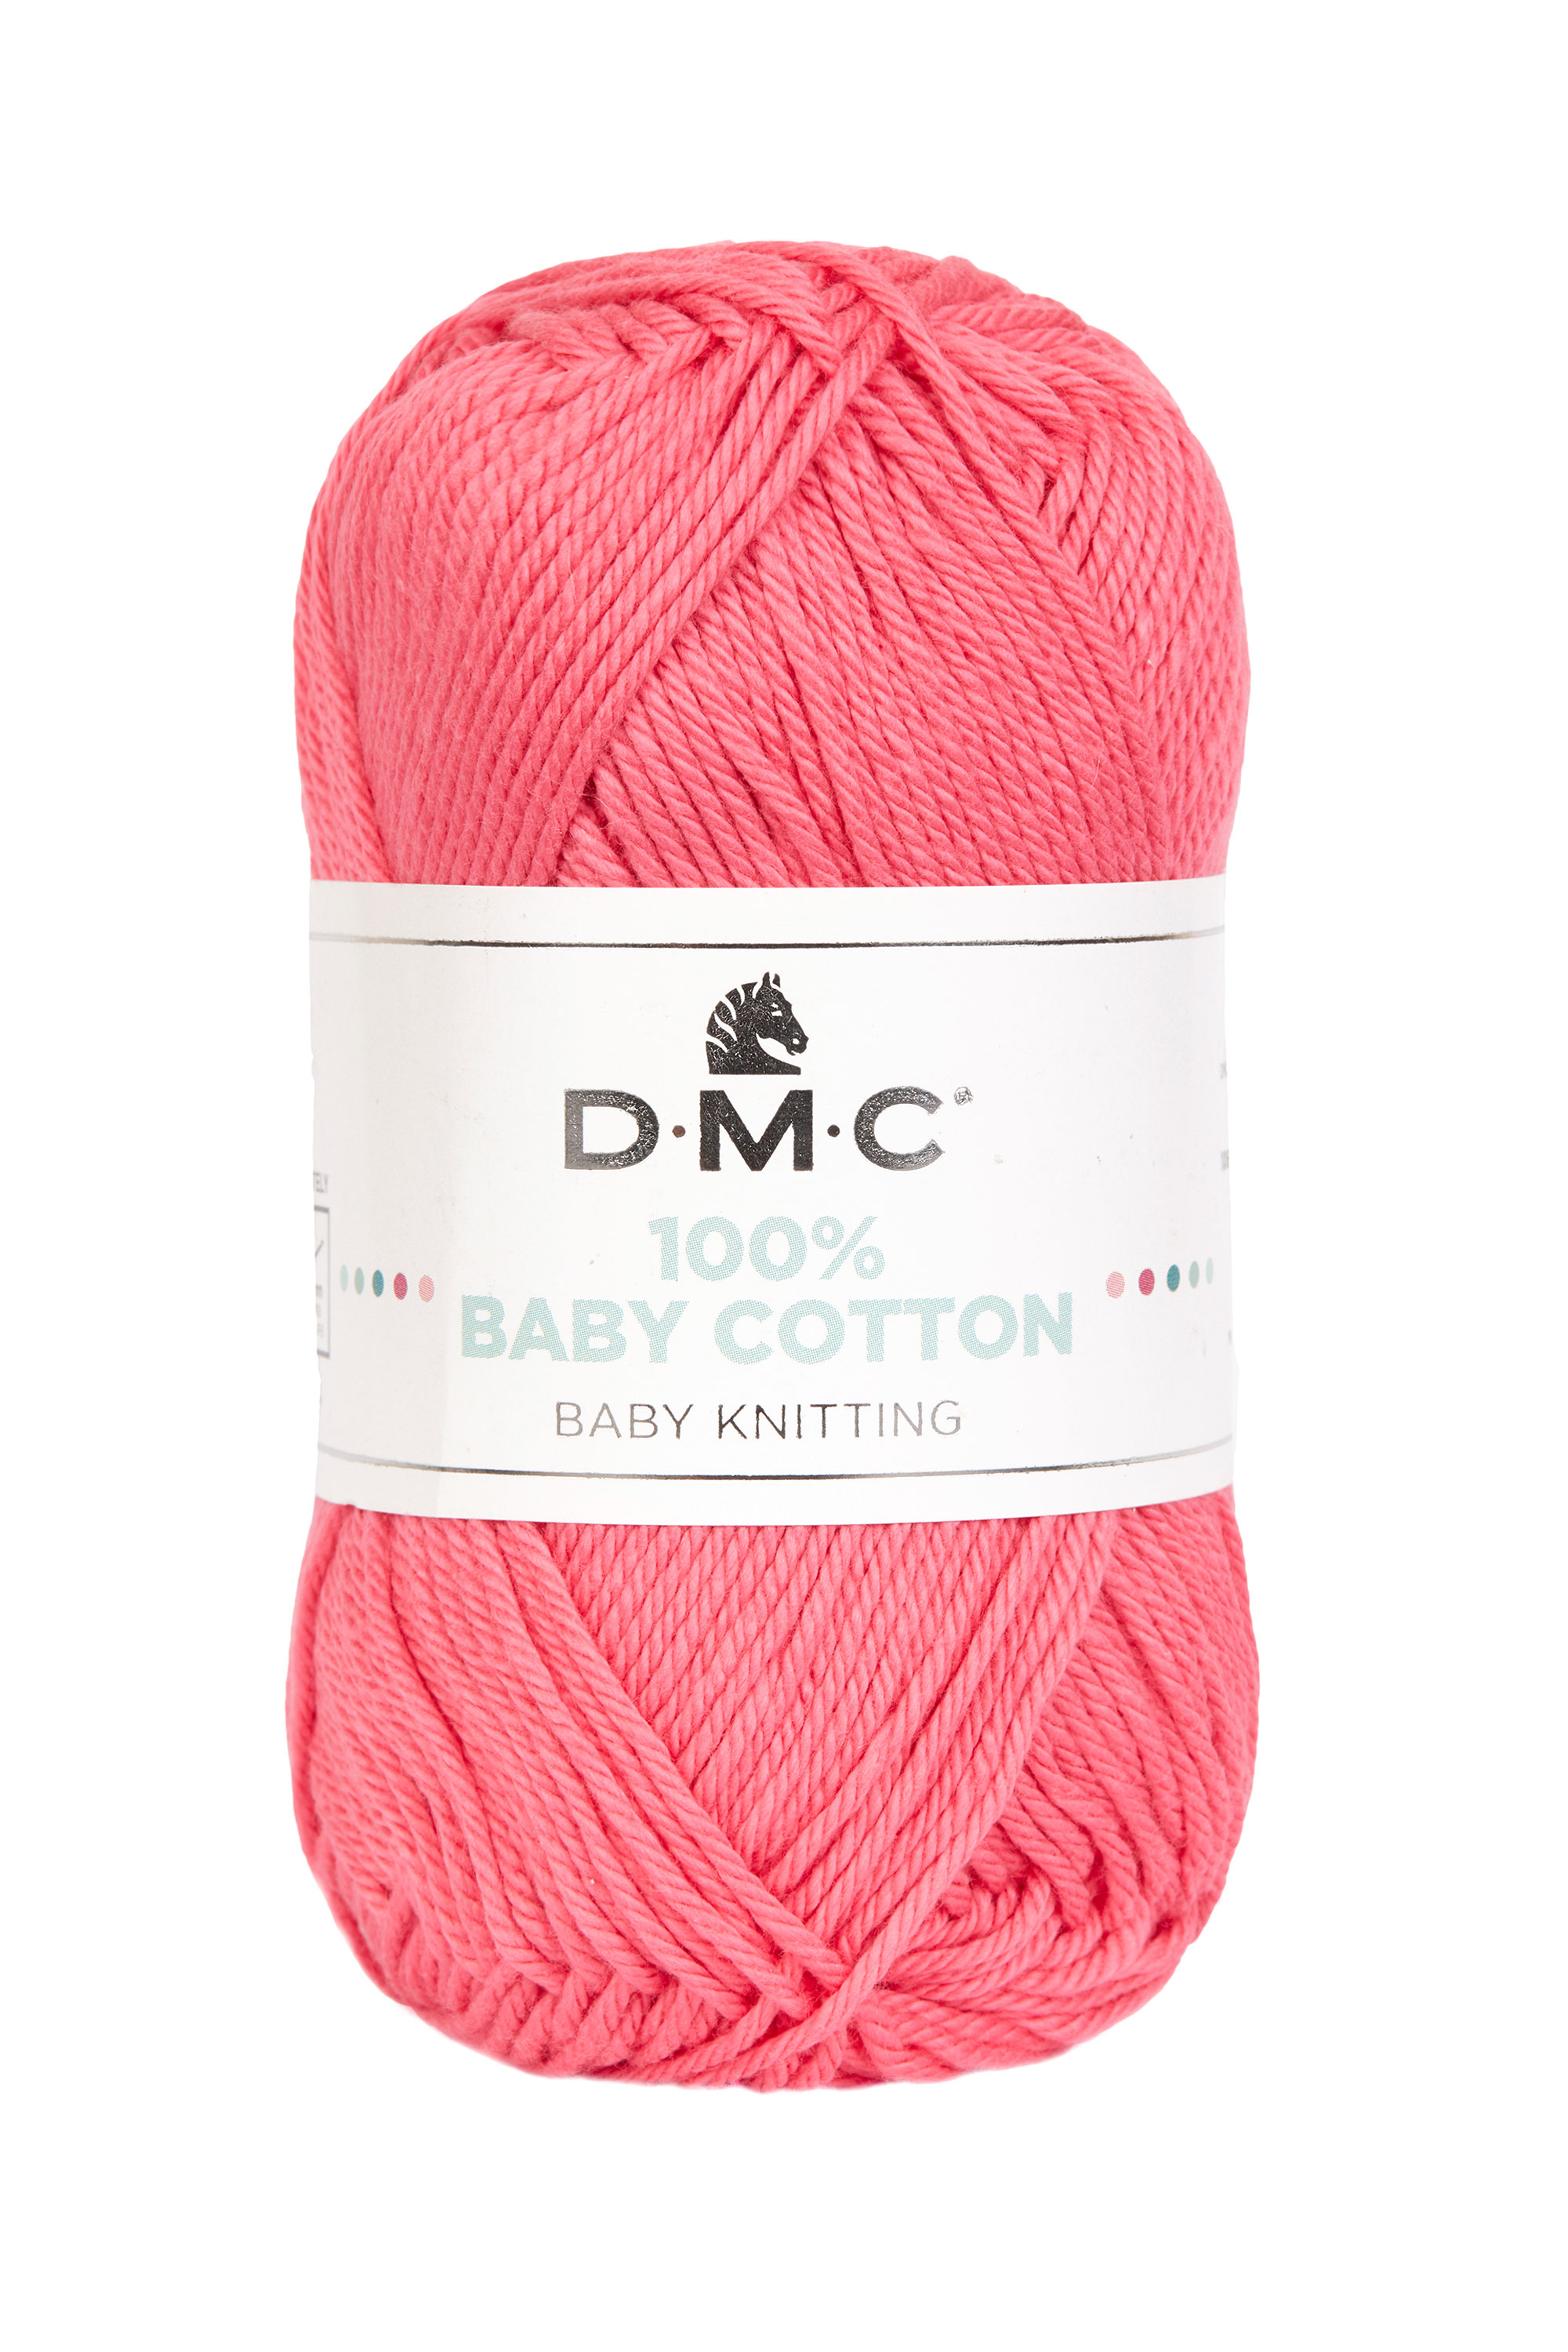 DMC 100% Baby Cotton - pink